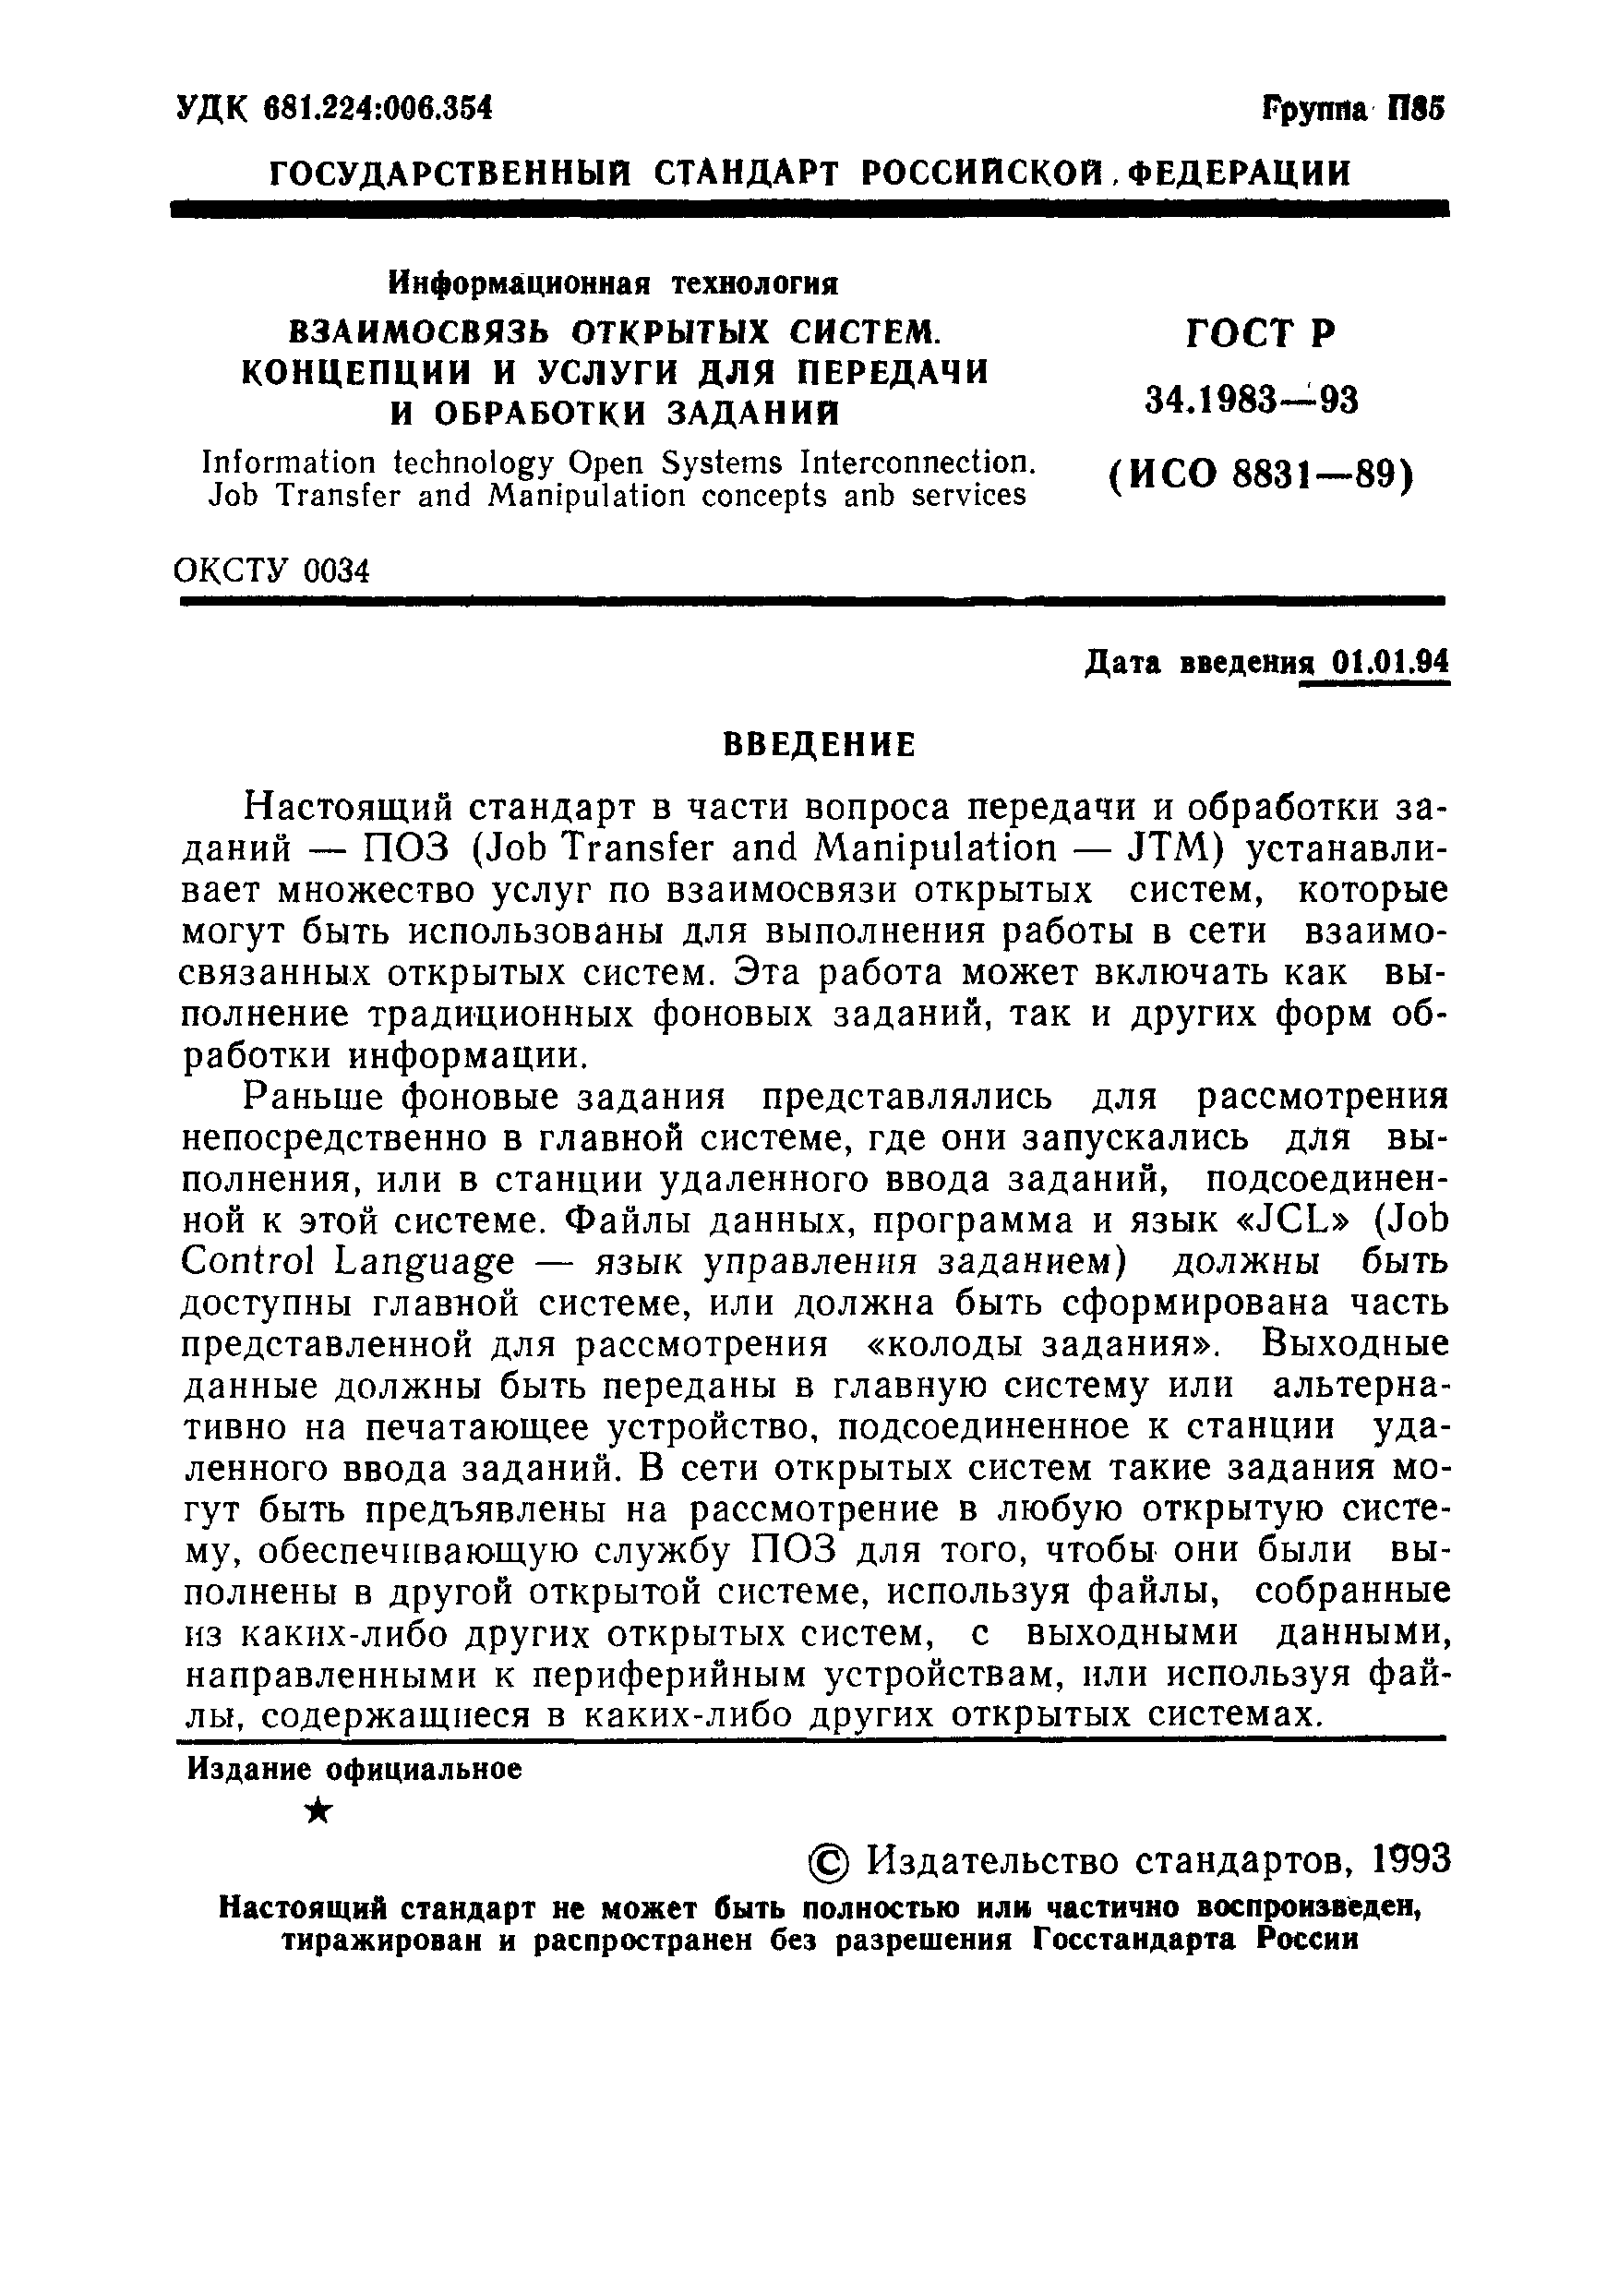 ГОСТ Р 34.1983-93. Страница 2